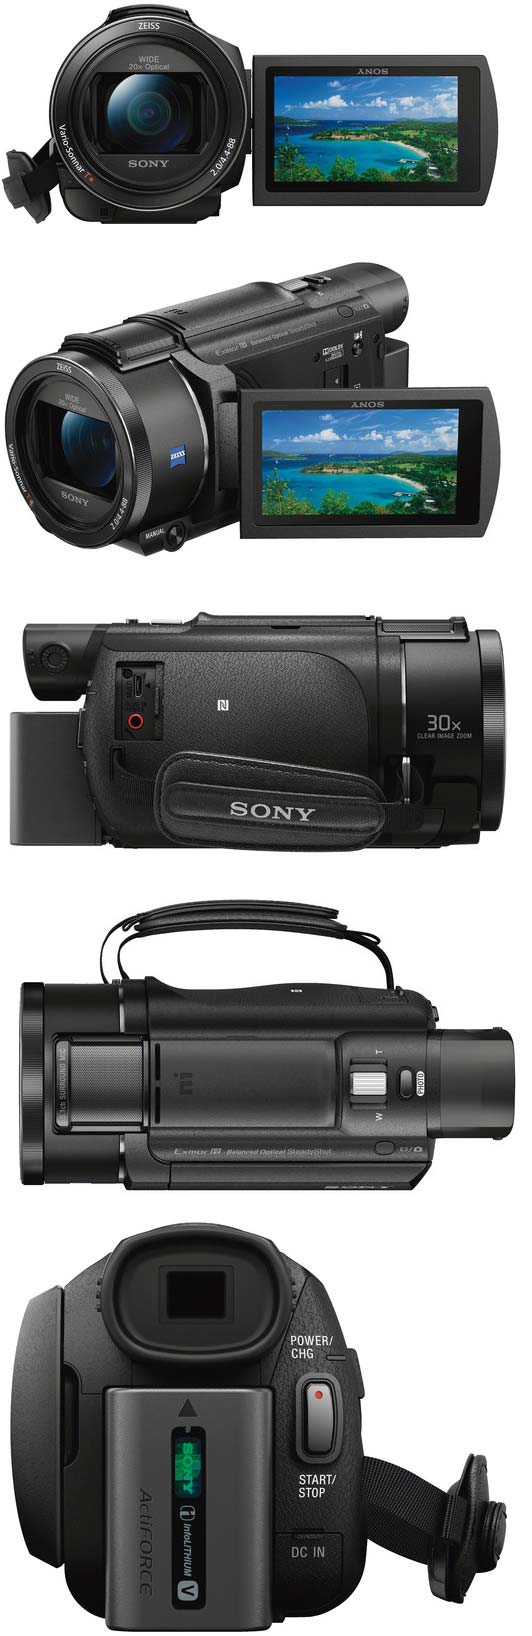 На фото можно увидеть аппарат Sony FDR-AX53